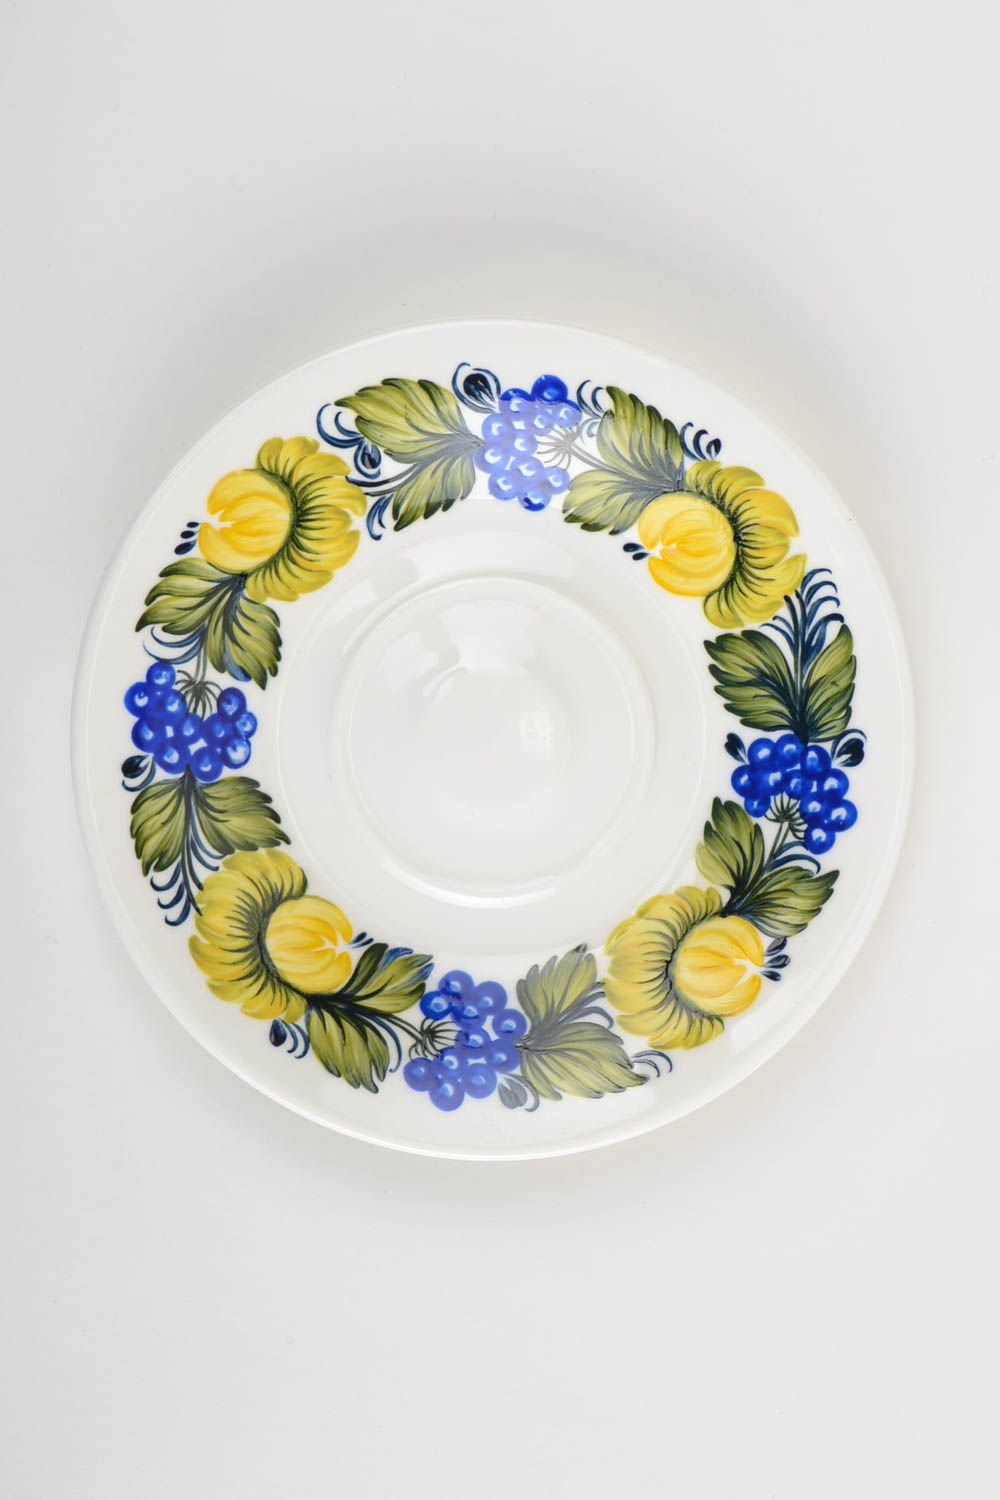 Unusual handmade porcelain saucer ceramic kitchenware table setting ideas photo 3